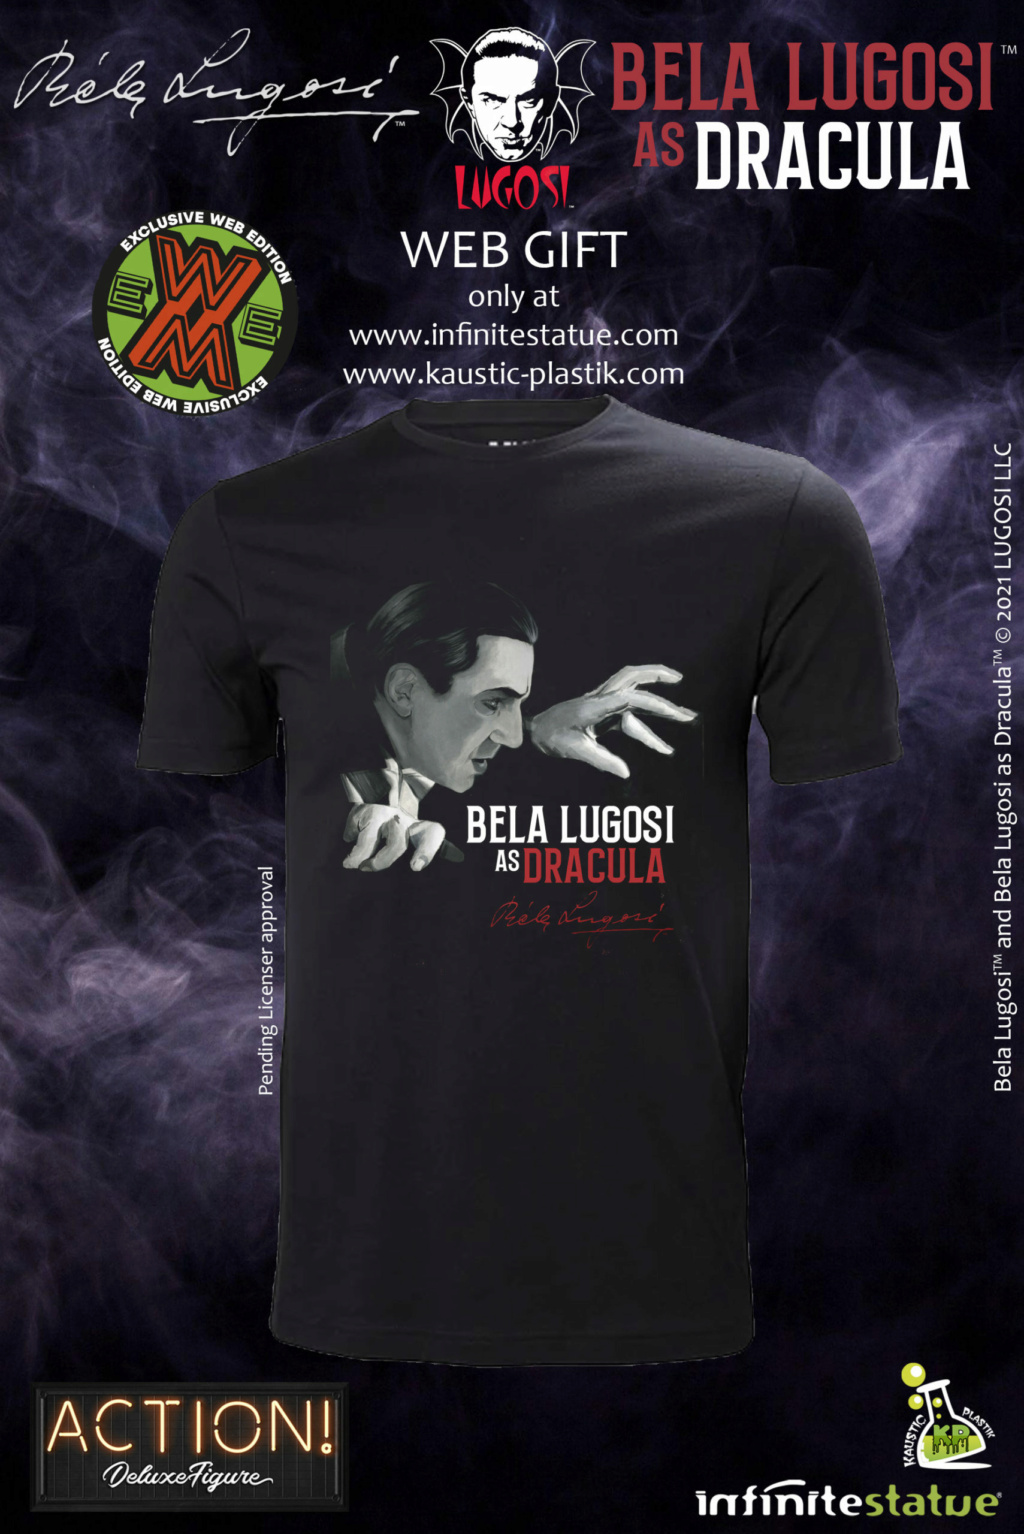 BelaLugosi - NEW PRODUCT: Kaustic Plastik & Infinite Statue: Bela Lugosi as Dracula (standard, deluxe & exclusive) action figure 7474